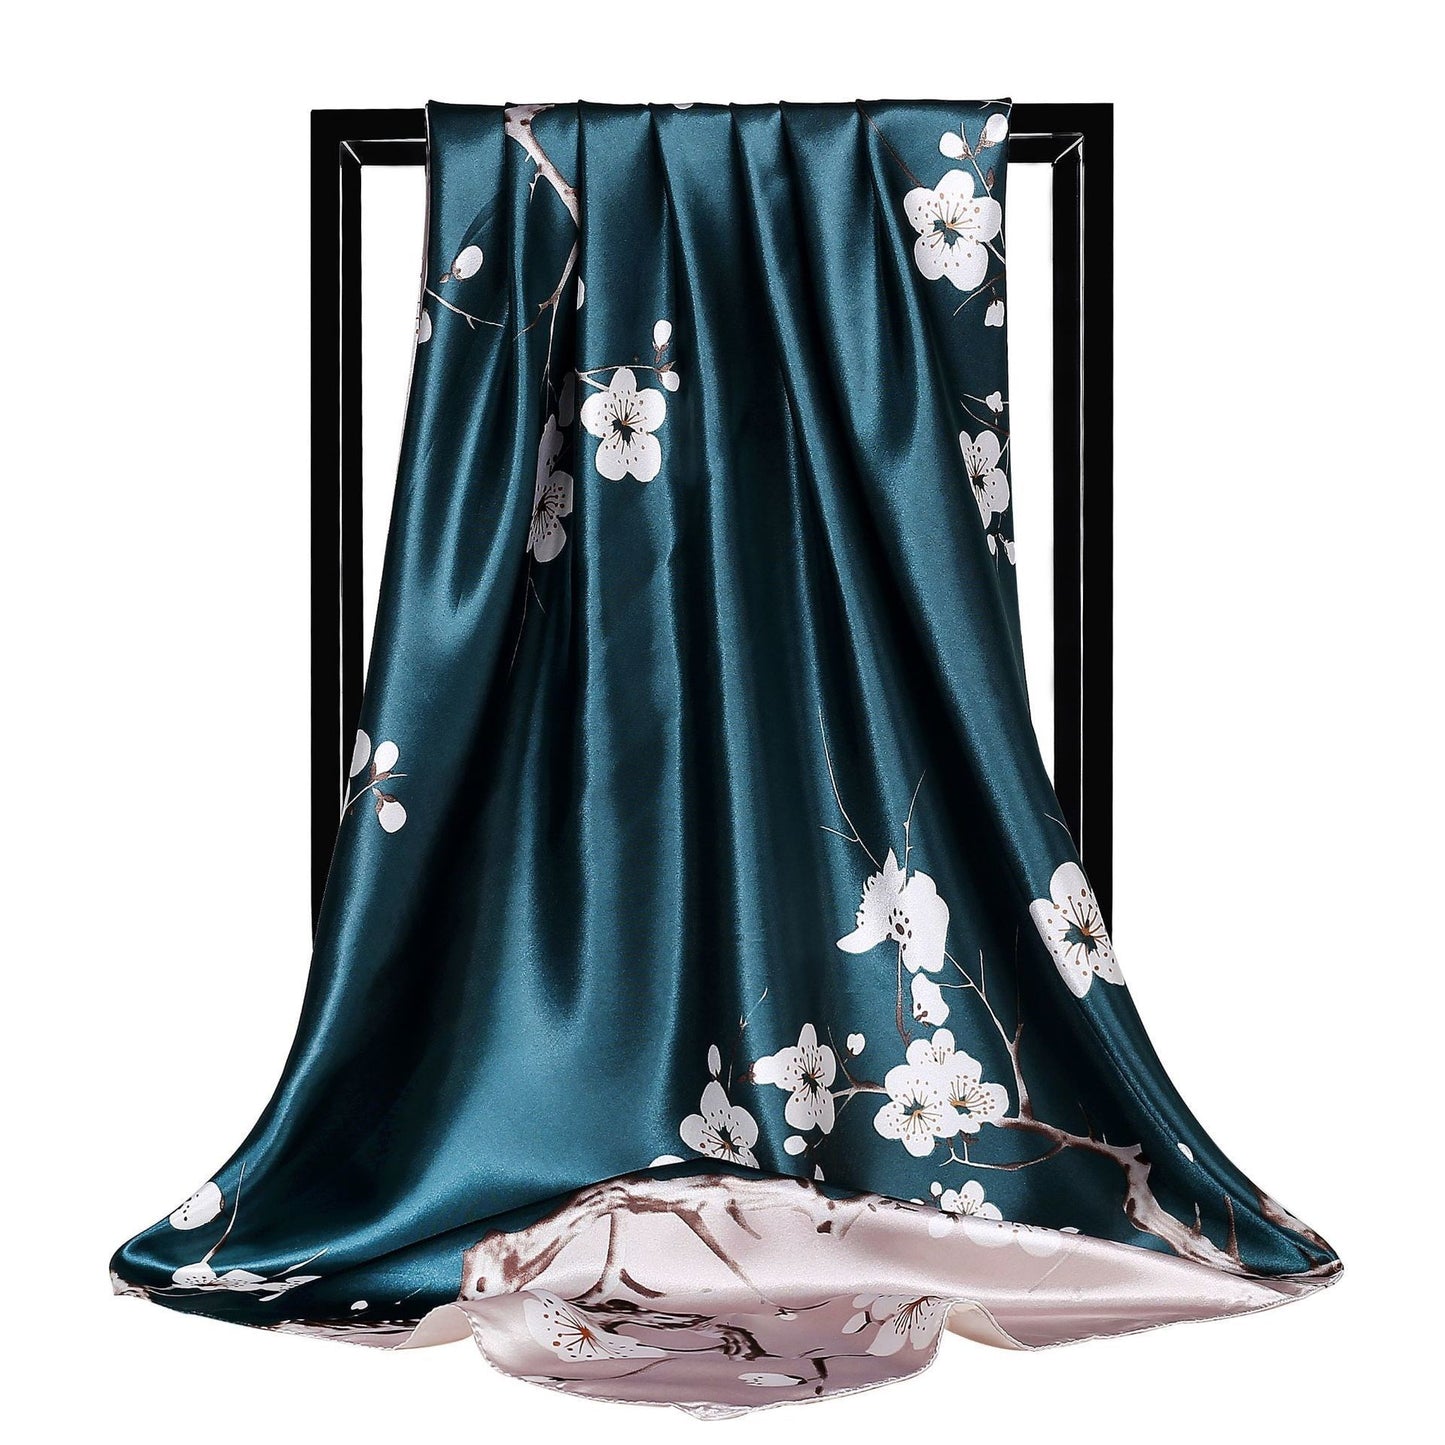 Elegance in Silk: Large Square Simulation Silk Scarf